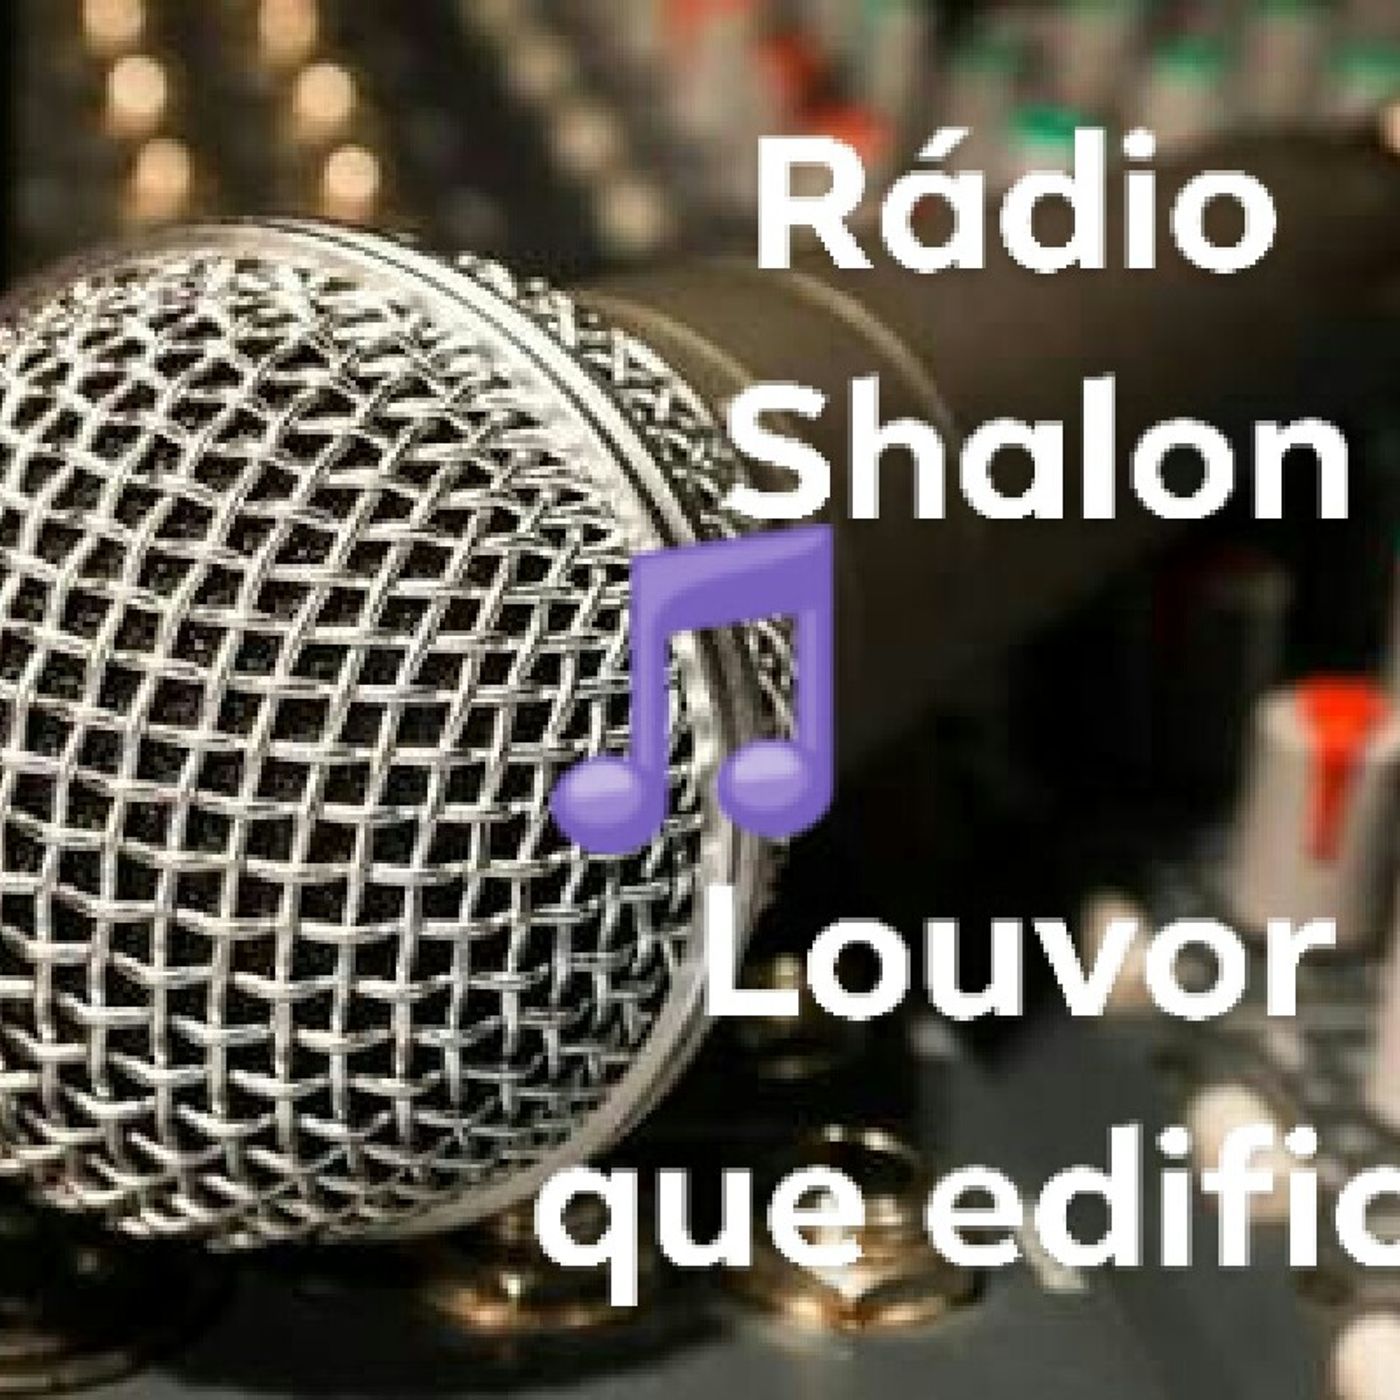 Shalon _Melodia De Paz. Louvor q edifica